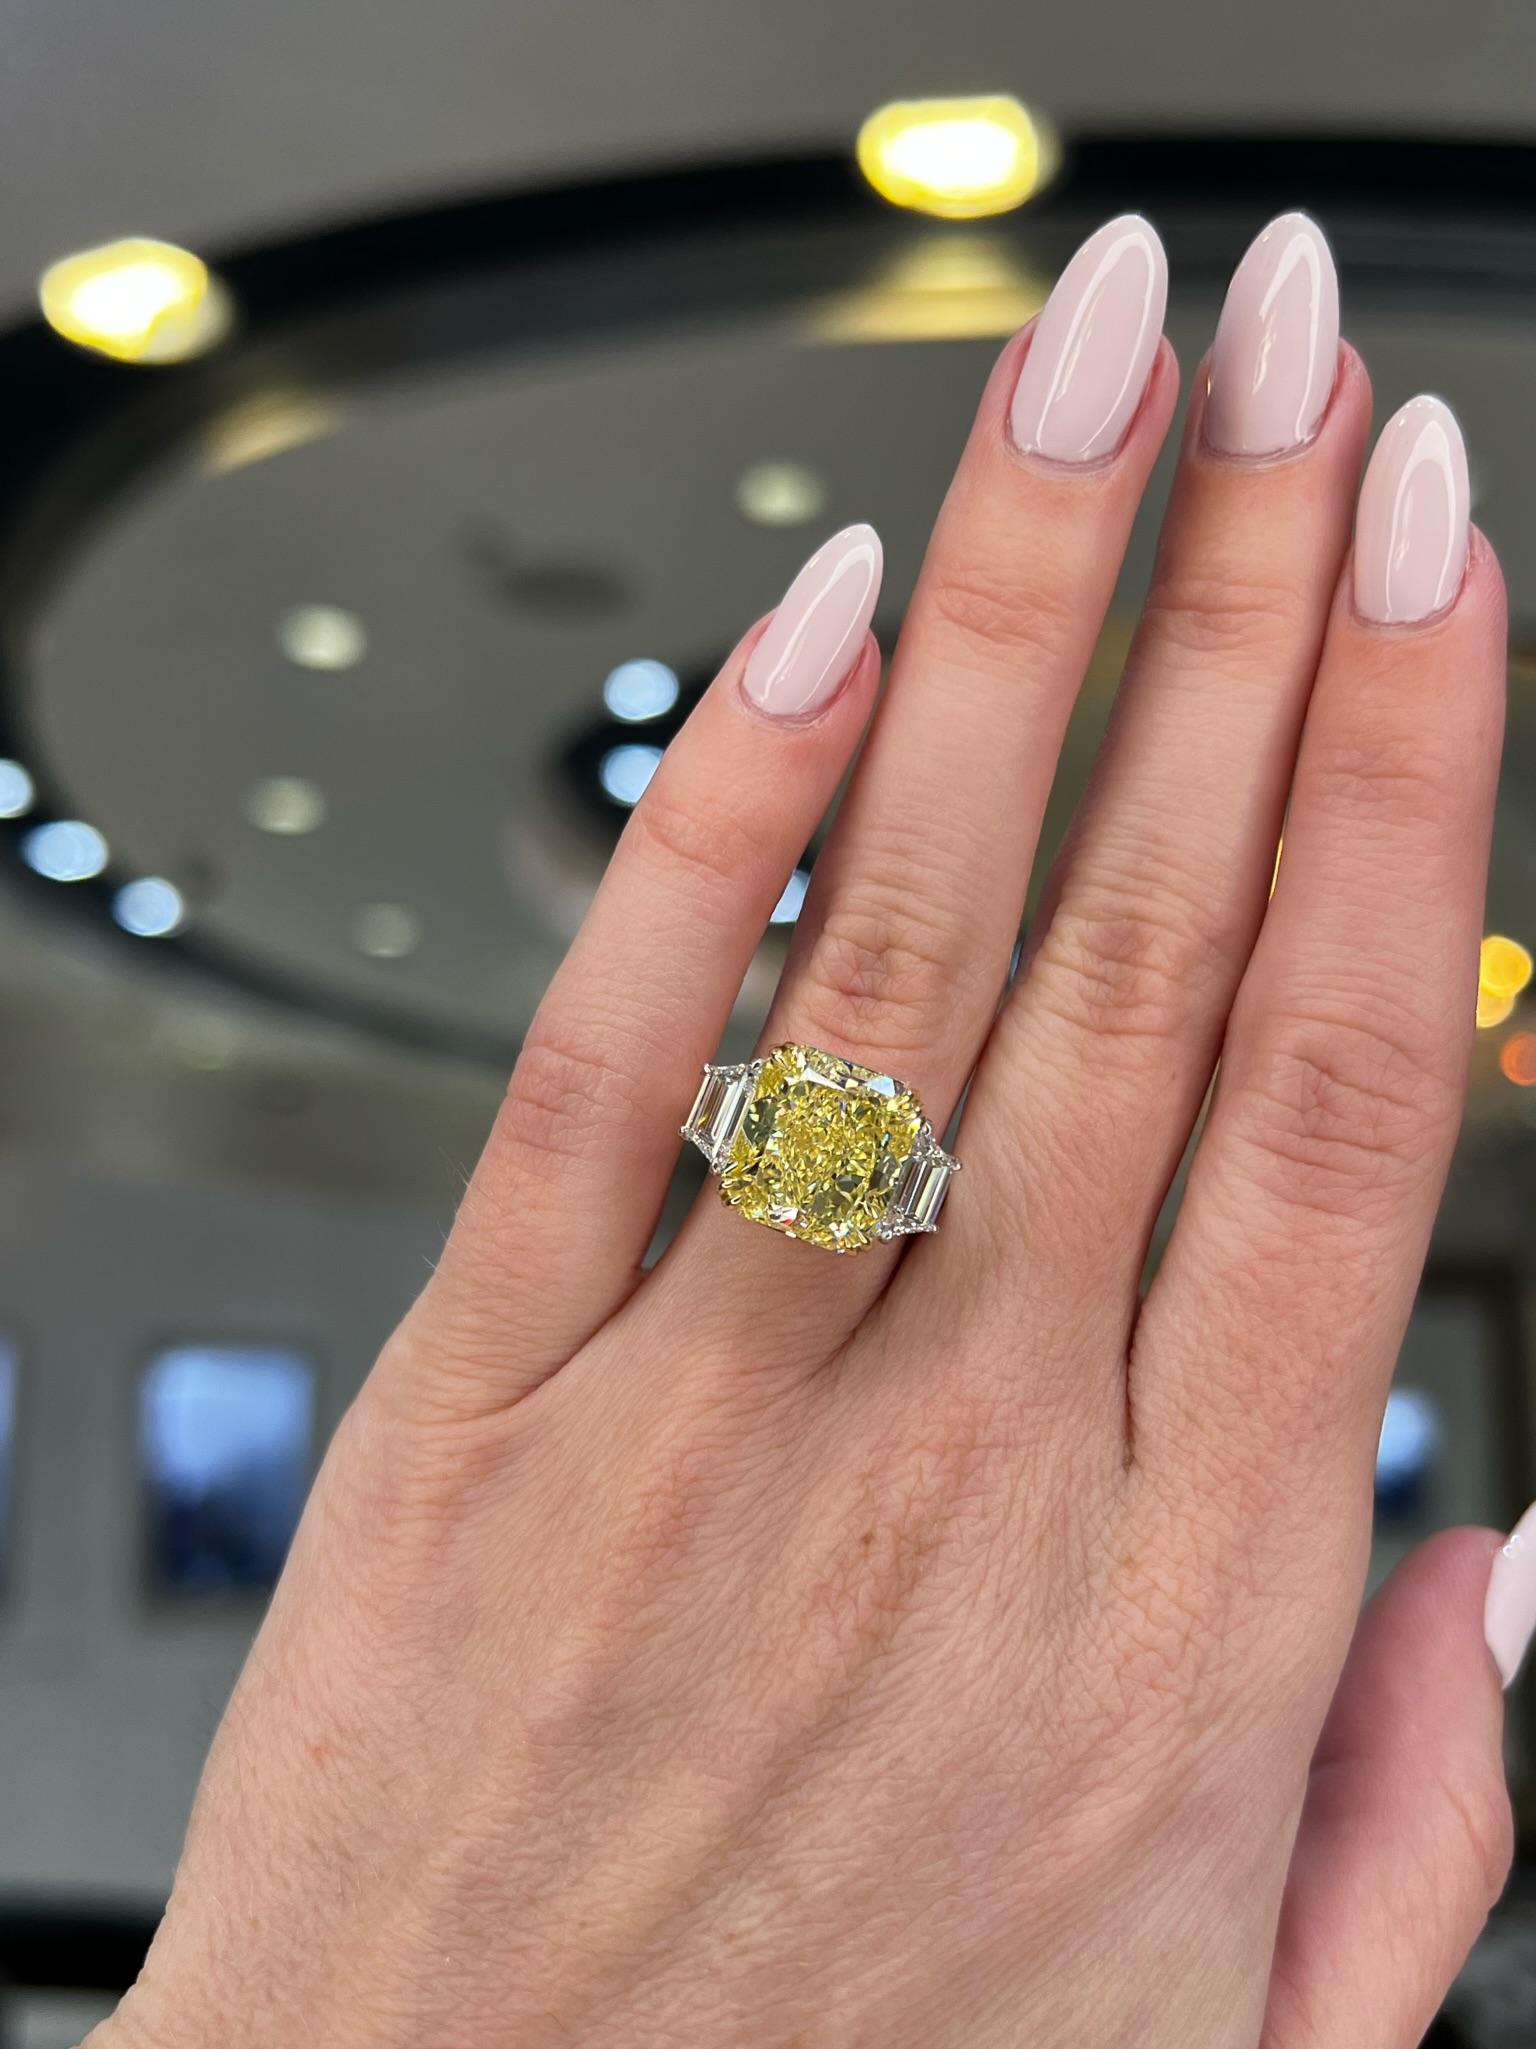 David Rosenberg 7.81 Carat Radiant Fancy Yellow VS1 GIA Diamond Engagement Ring For Sale 9